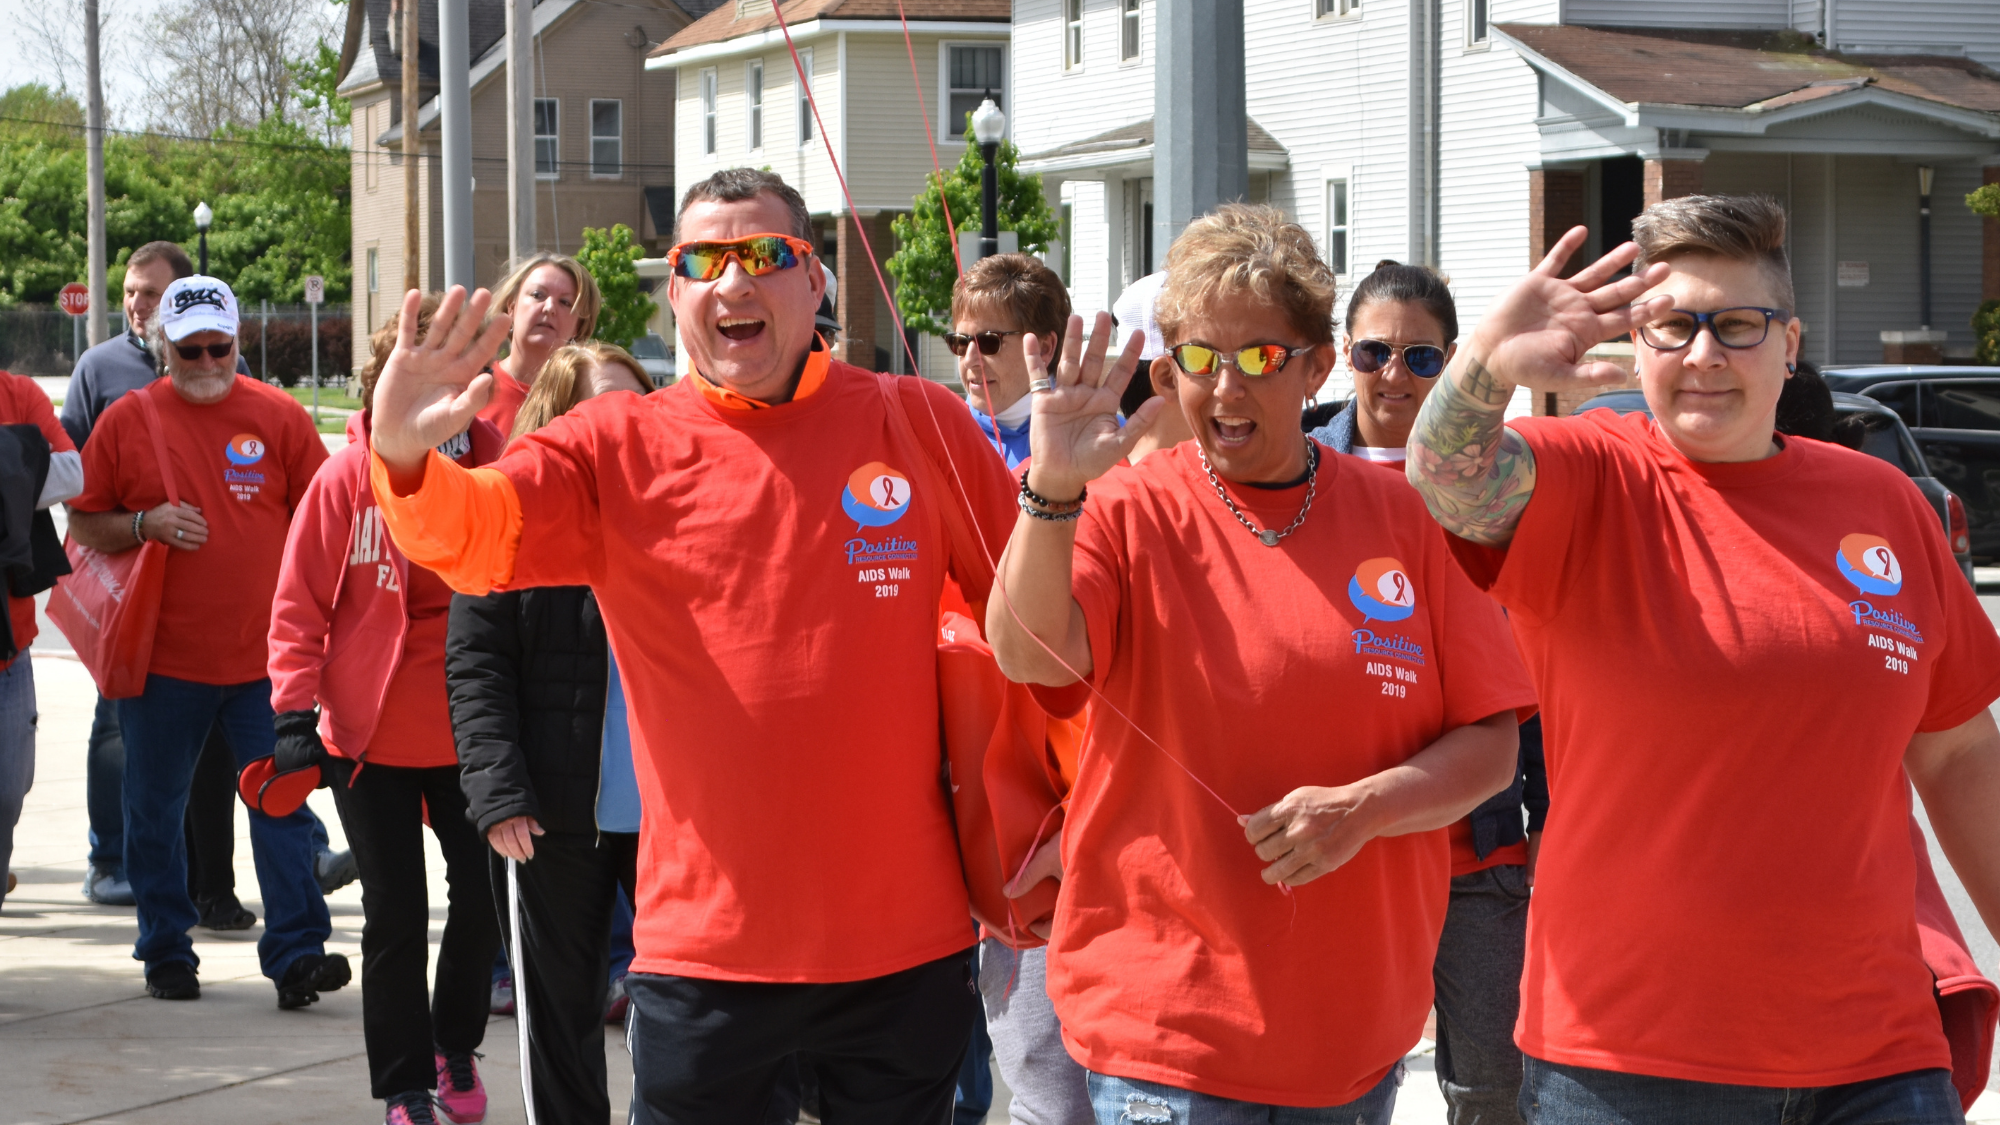 People wearing red shirts smiling and waving at AIDS Walk